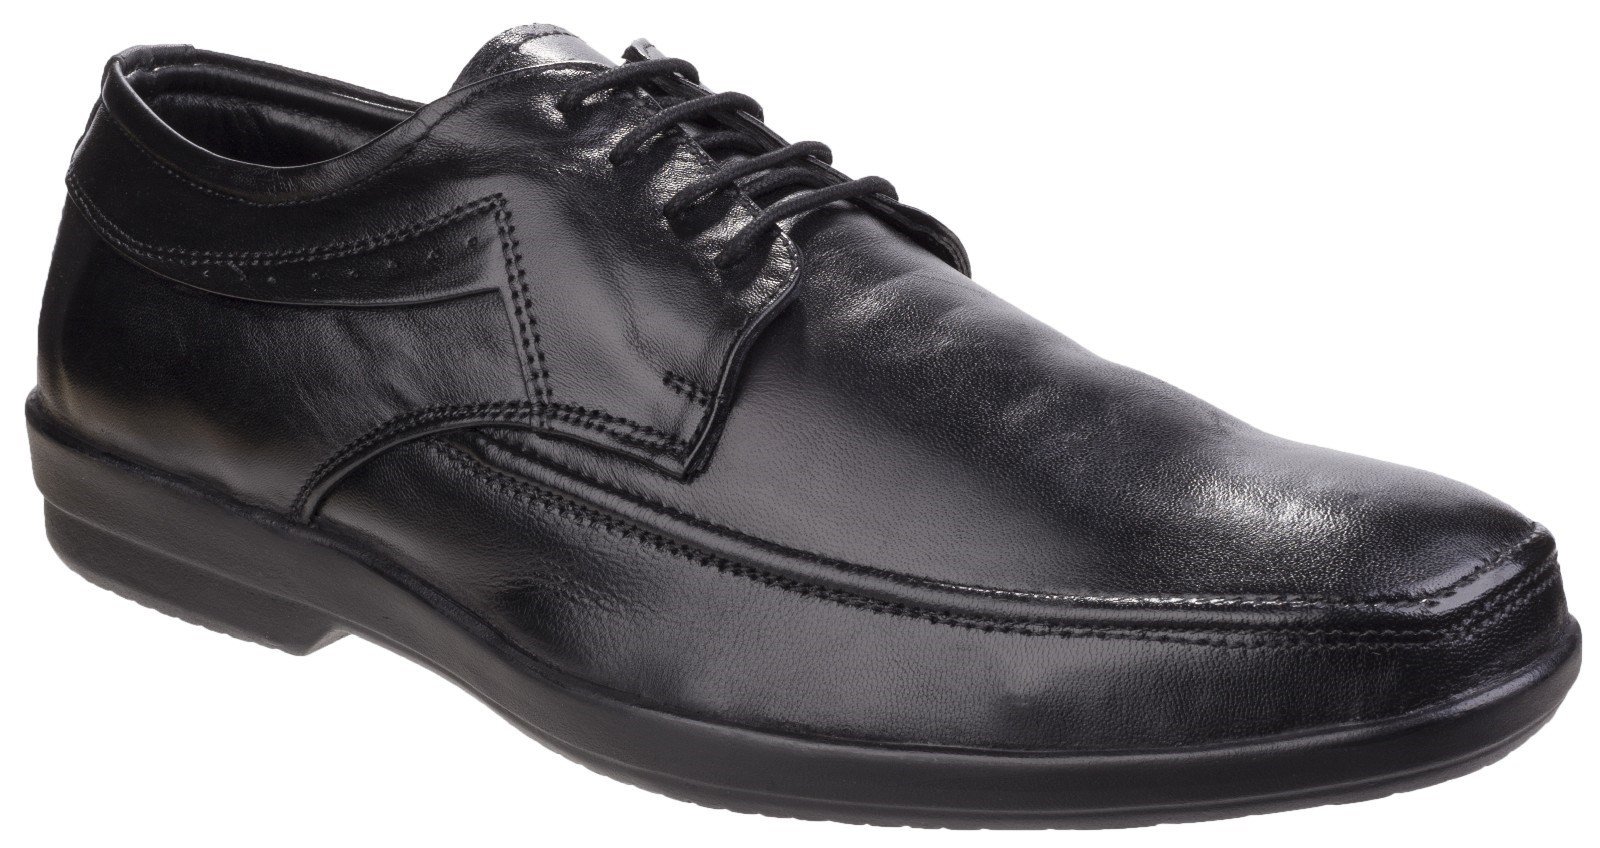 Fleet & Foster Men's Dave Apron Toe Formal Shoe Black 24951-41295 - Black 6